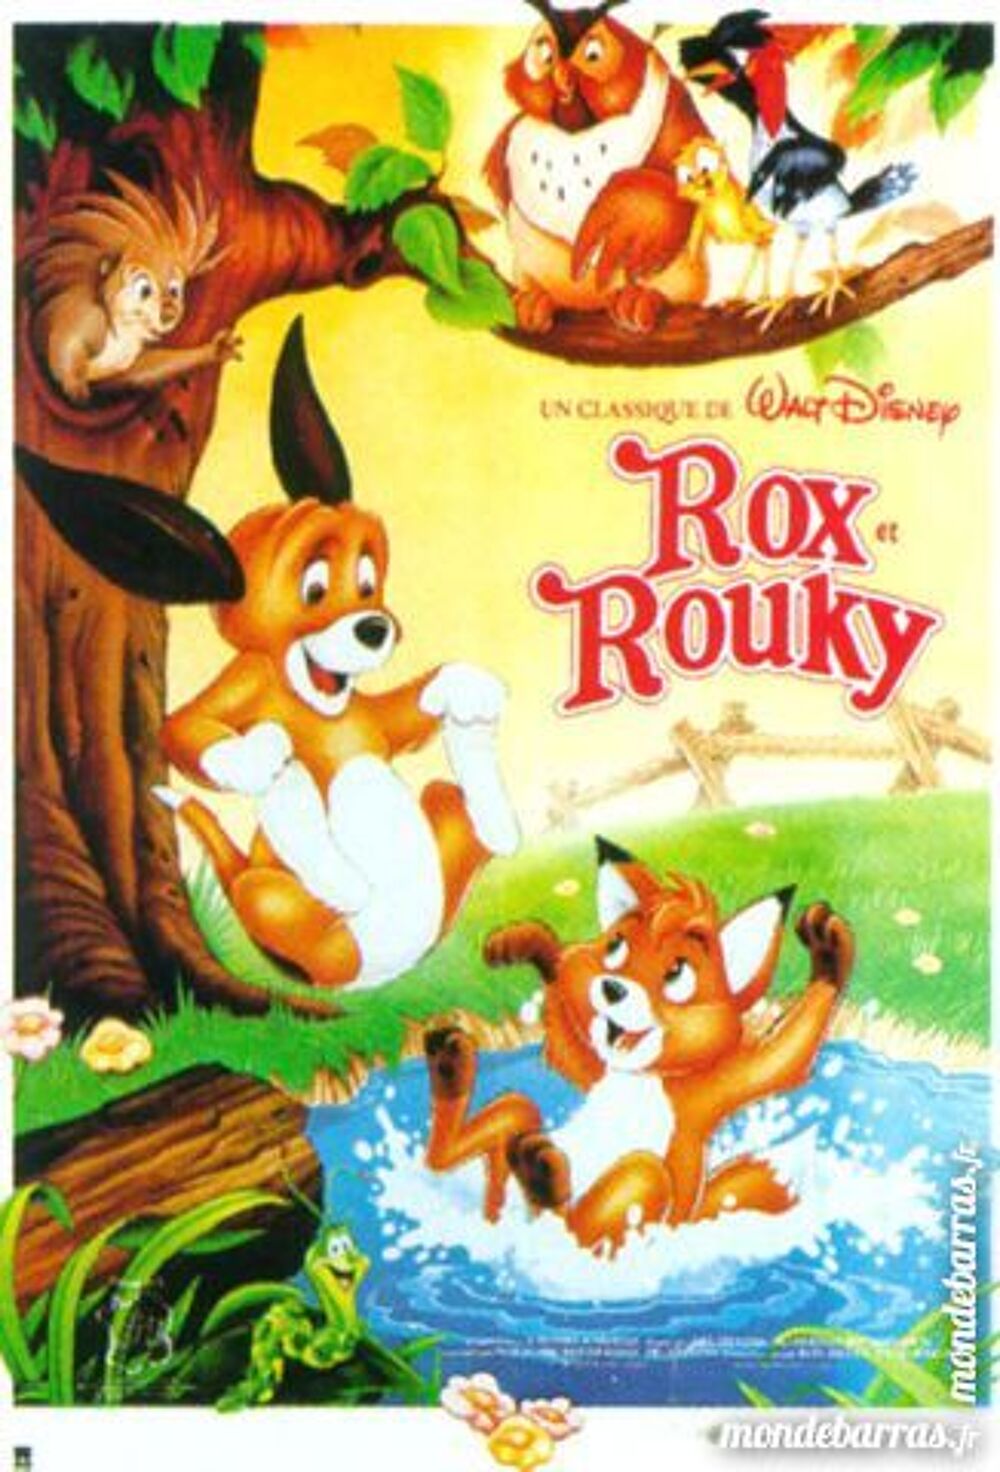 K7 Vhs: Rox et Rouky (245) DVD et blu-ray